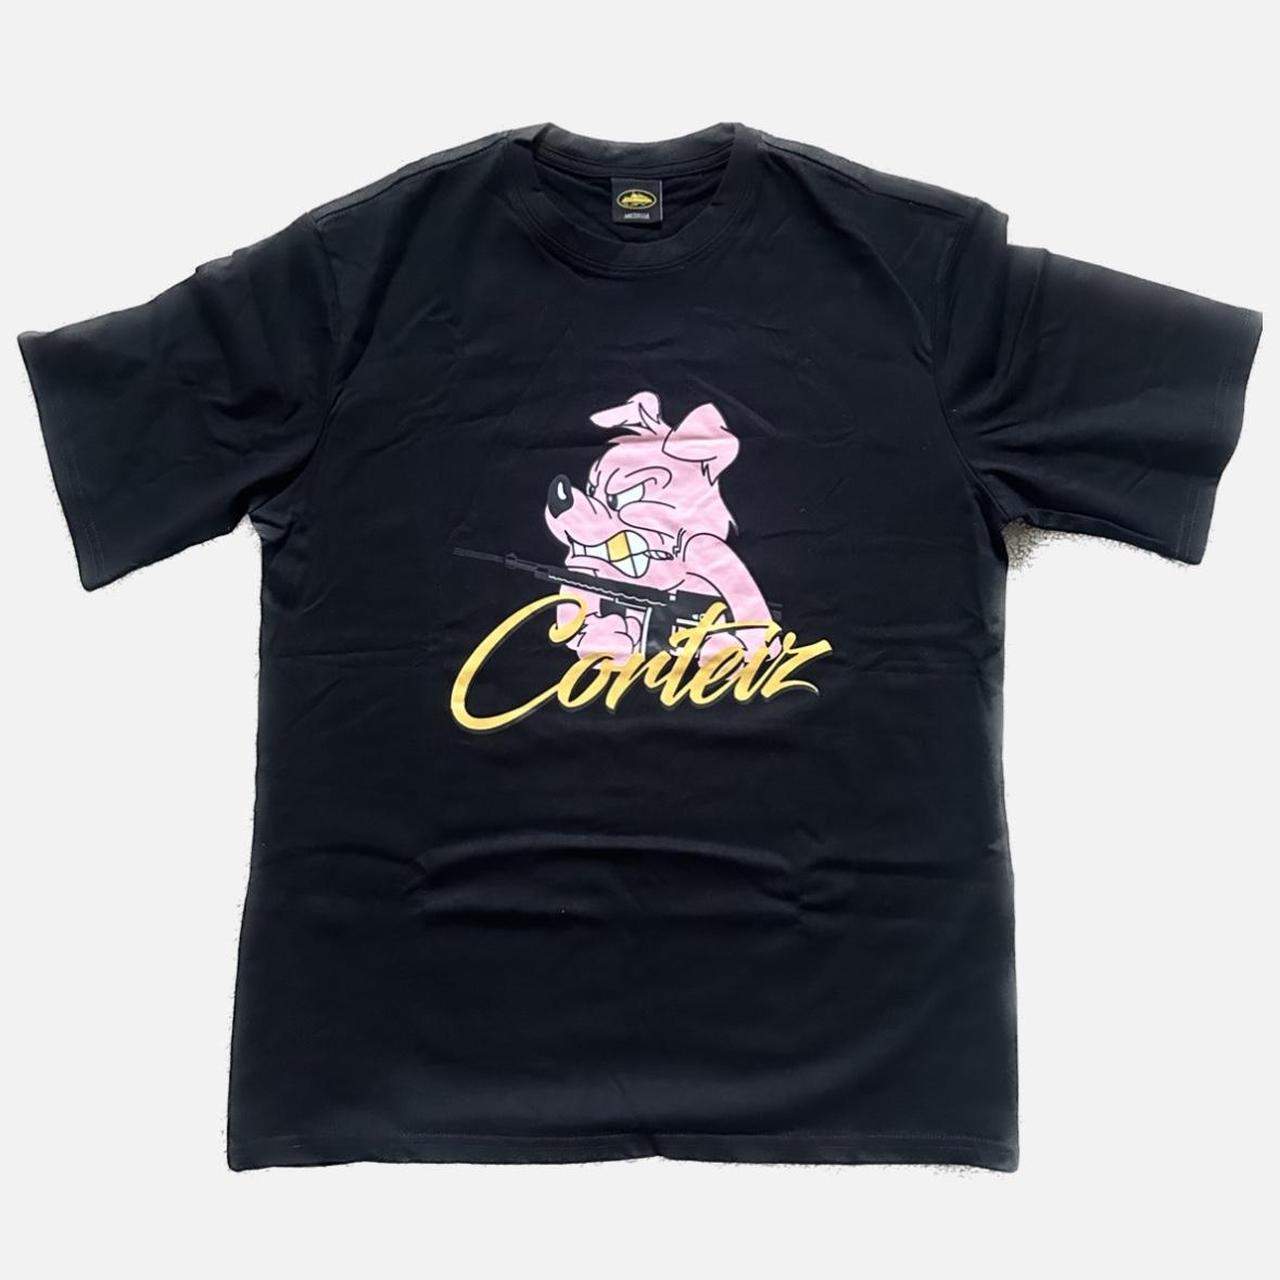 Corteiz Men's Black and Pink T-shirt